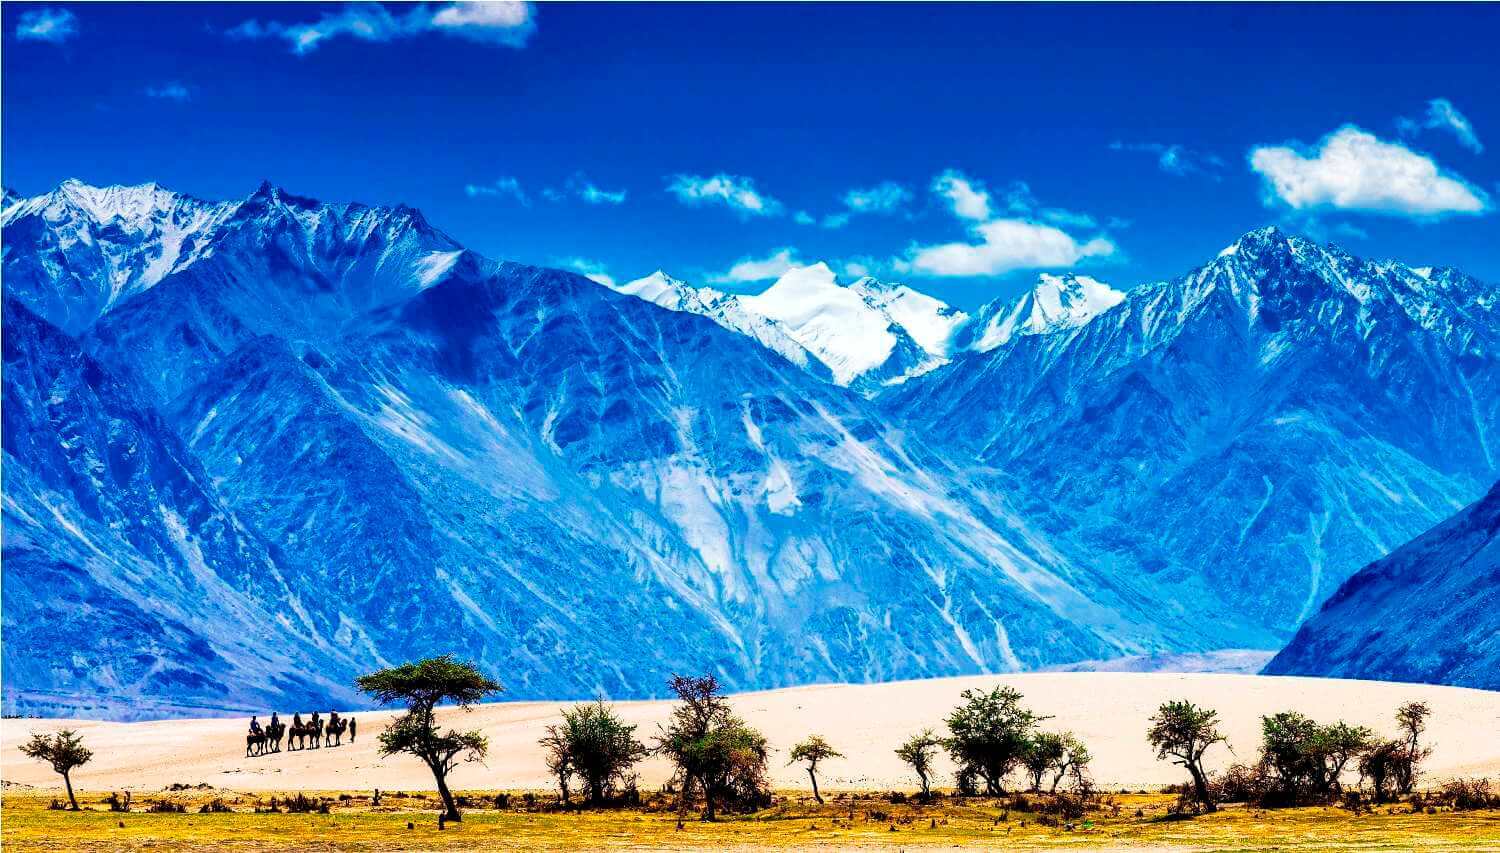 https://discoverlehladakh.in/wp-content/uploads/2020/06/Nubra-Valley-Ladakh.jpg